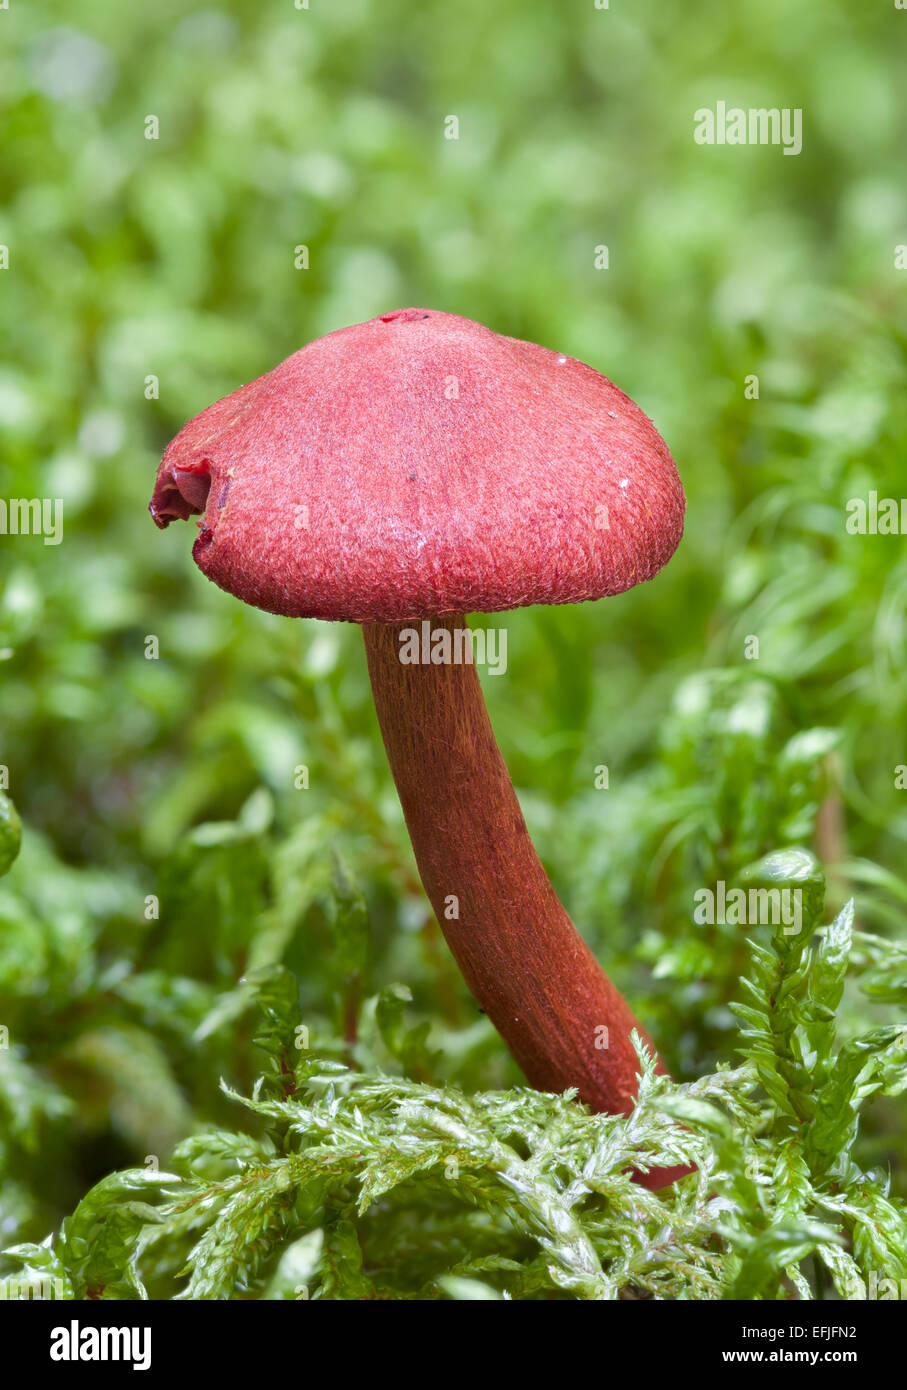 Red-gilled webcap mushroom Stock Photo